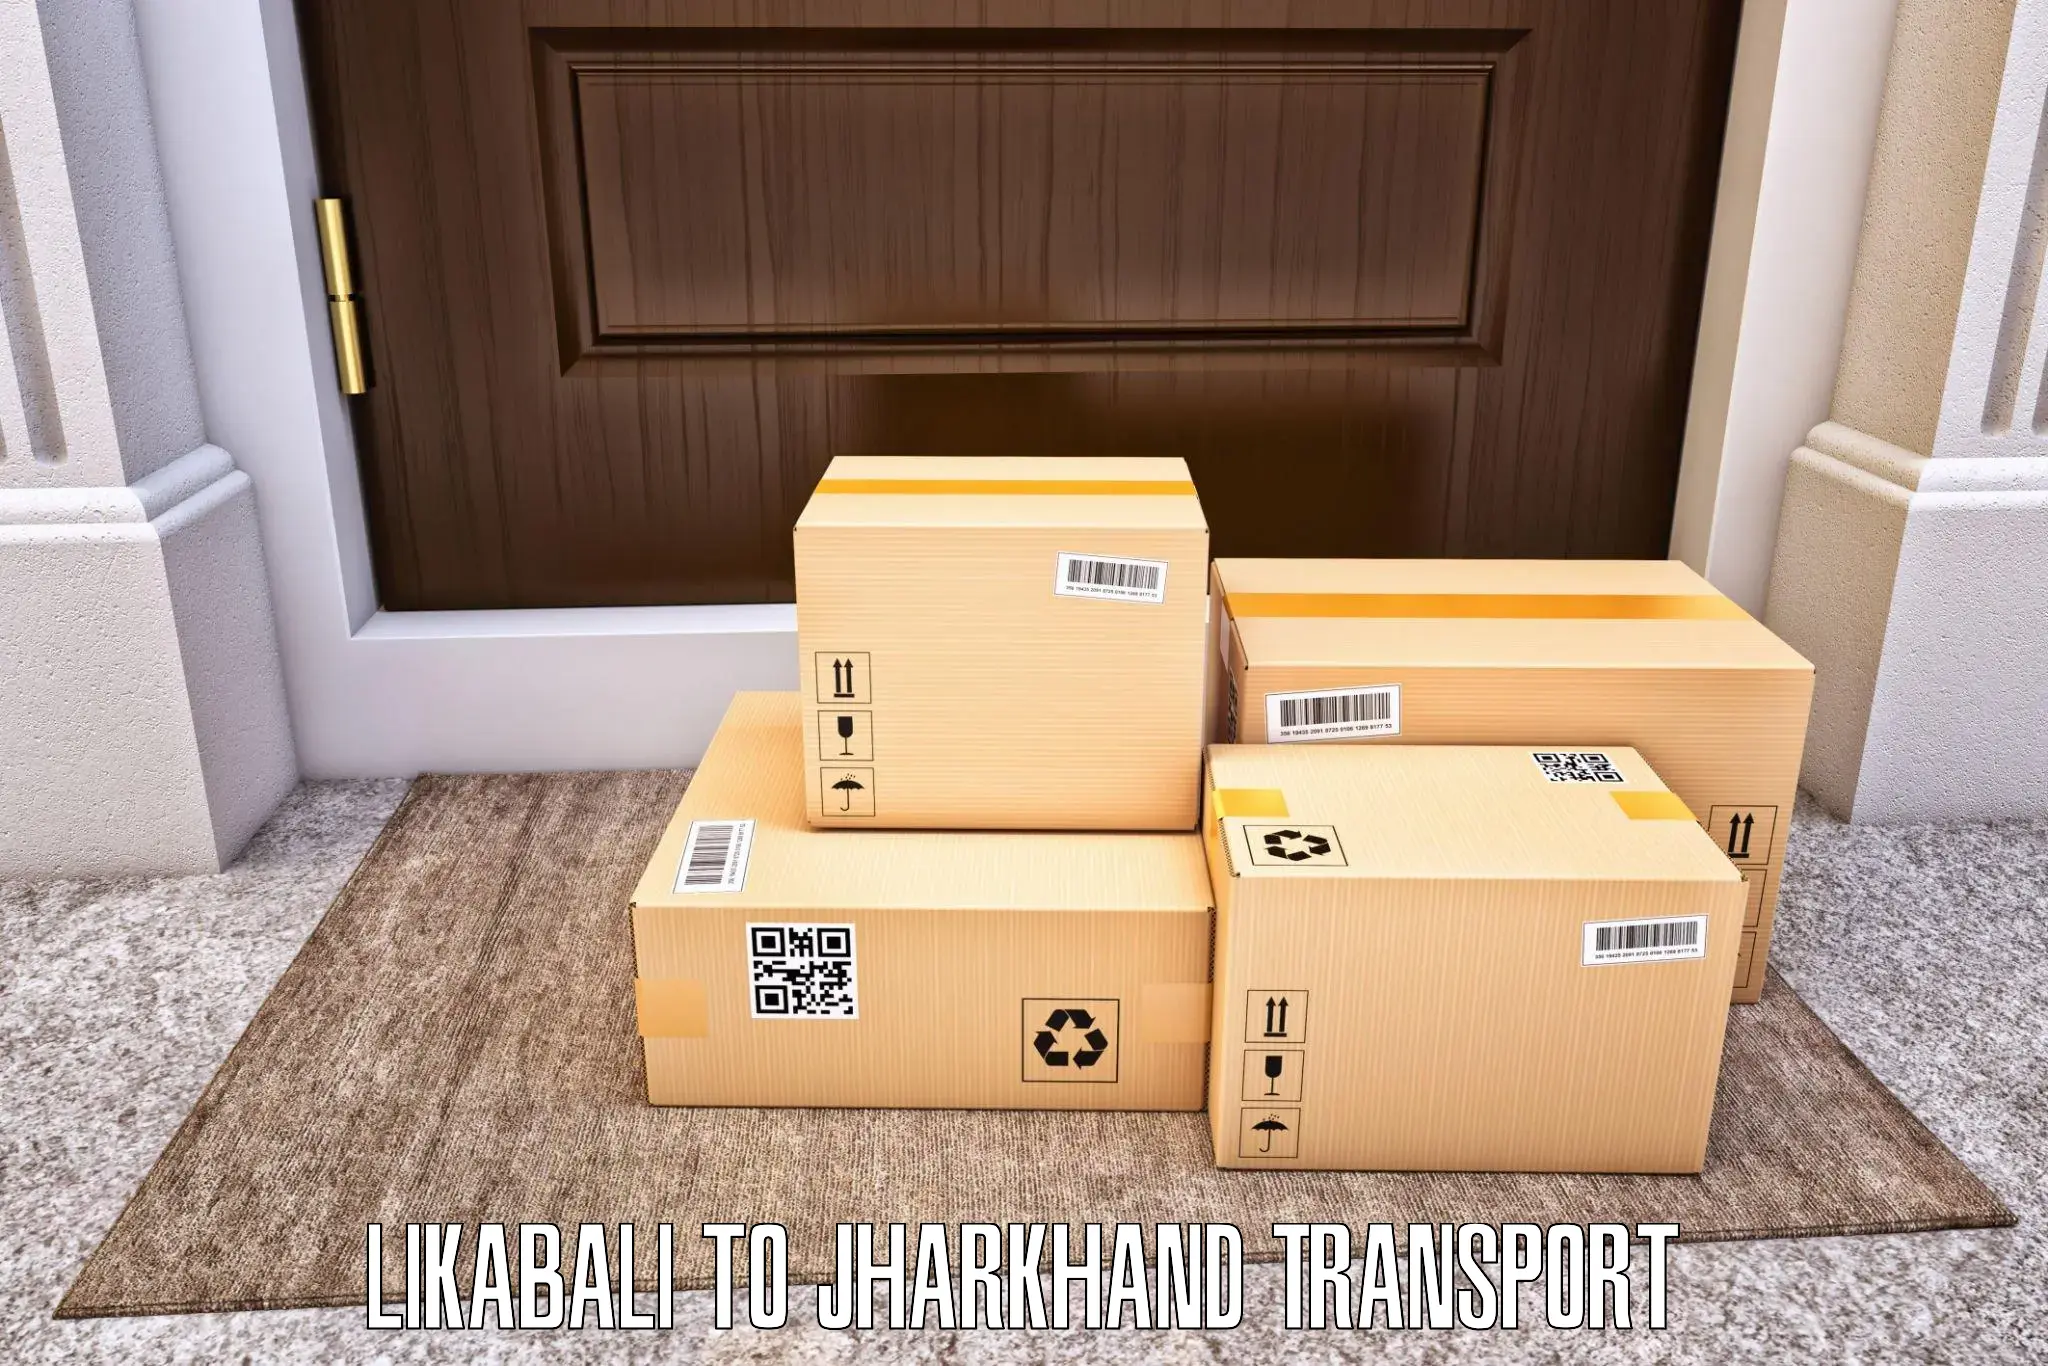 Transport shared services Likabali to Latehar